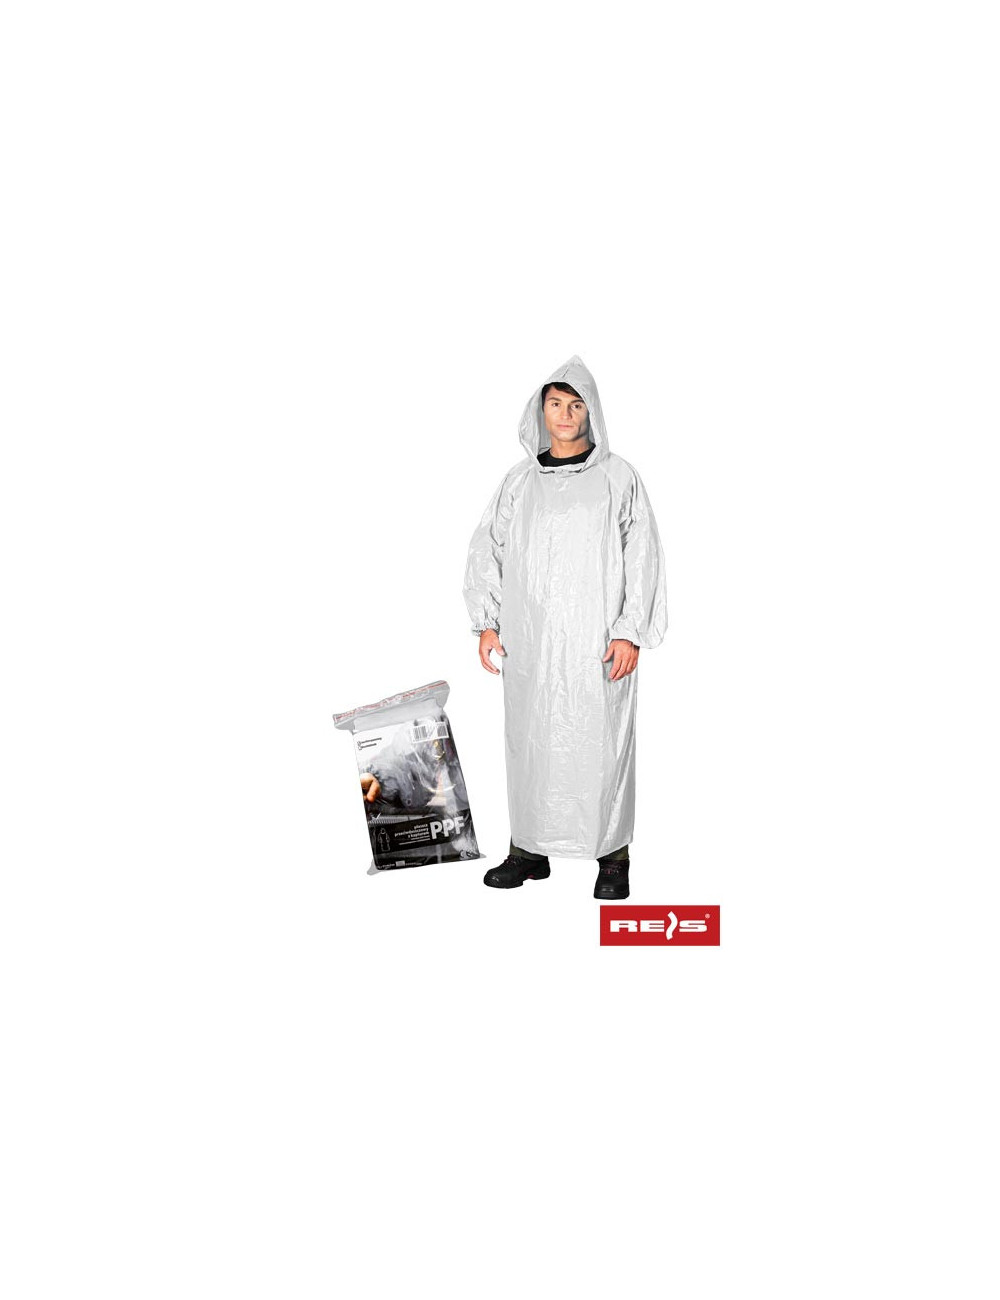 Protective ppf rain coat in white Reis